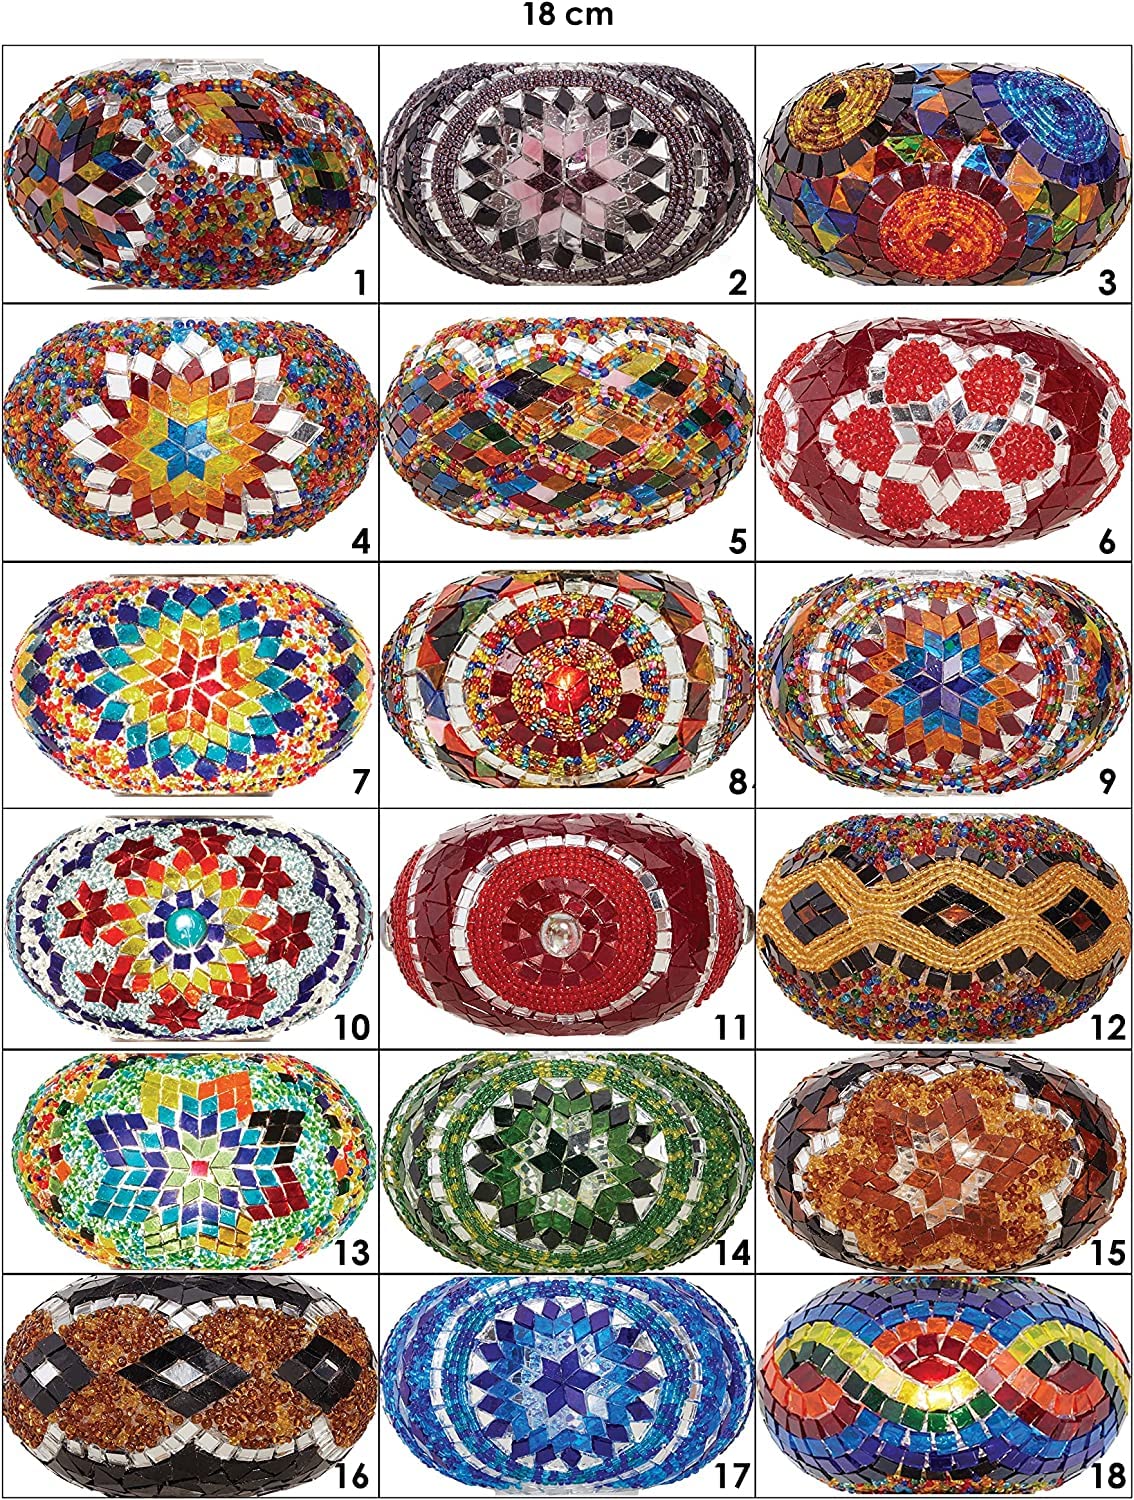 DEMMEX 2020 Customizable Turkish Moroccan Mosaic Tiffany Floor Table Lamp 3 Big Globes